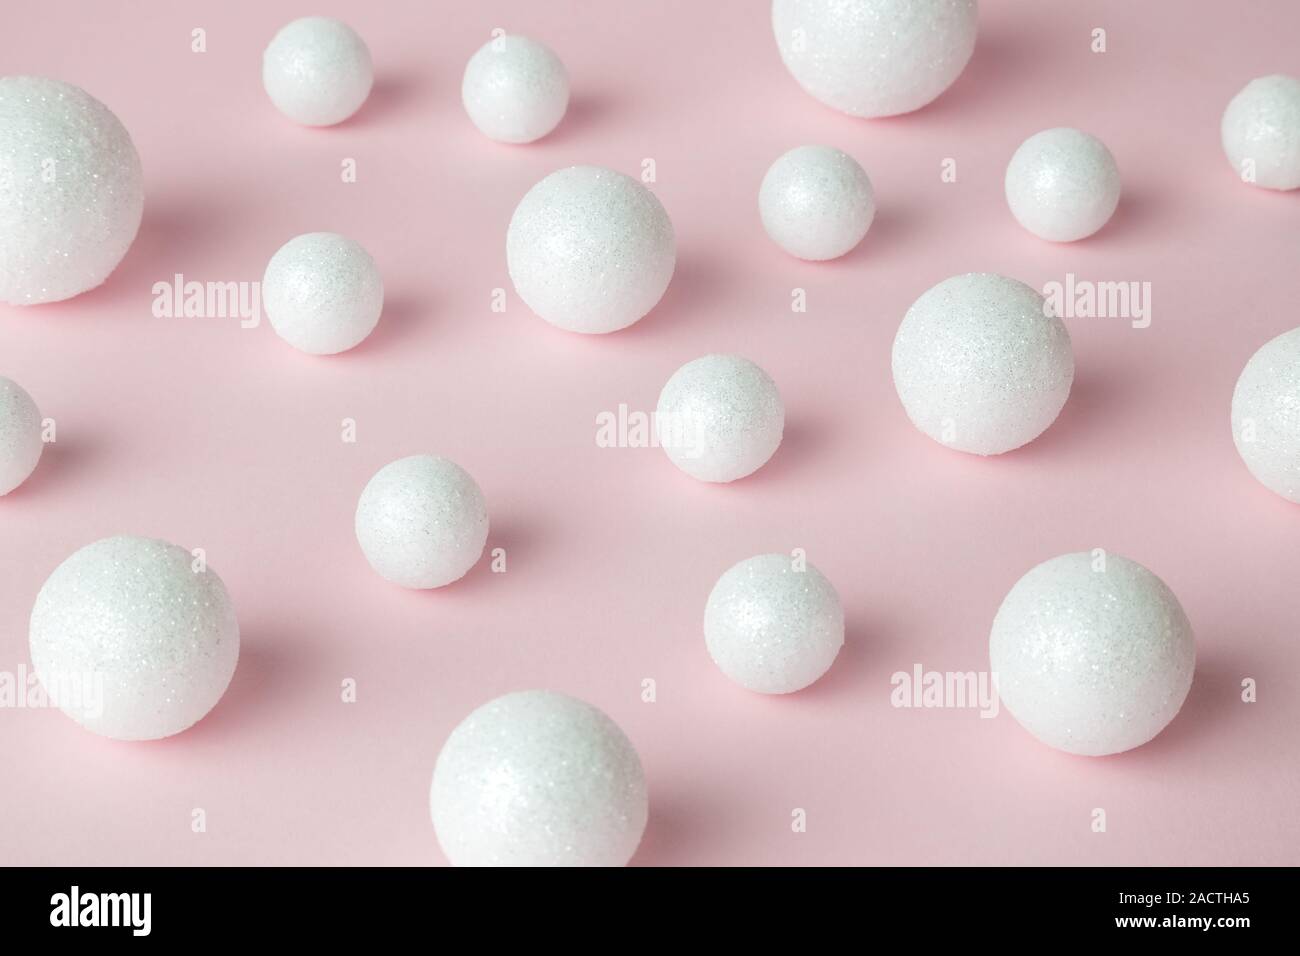 Bubbles made of styrofoam balls on pastel pink background minimal creative concept. Stock Photo